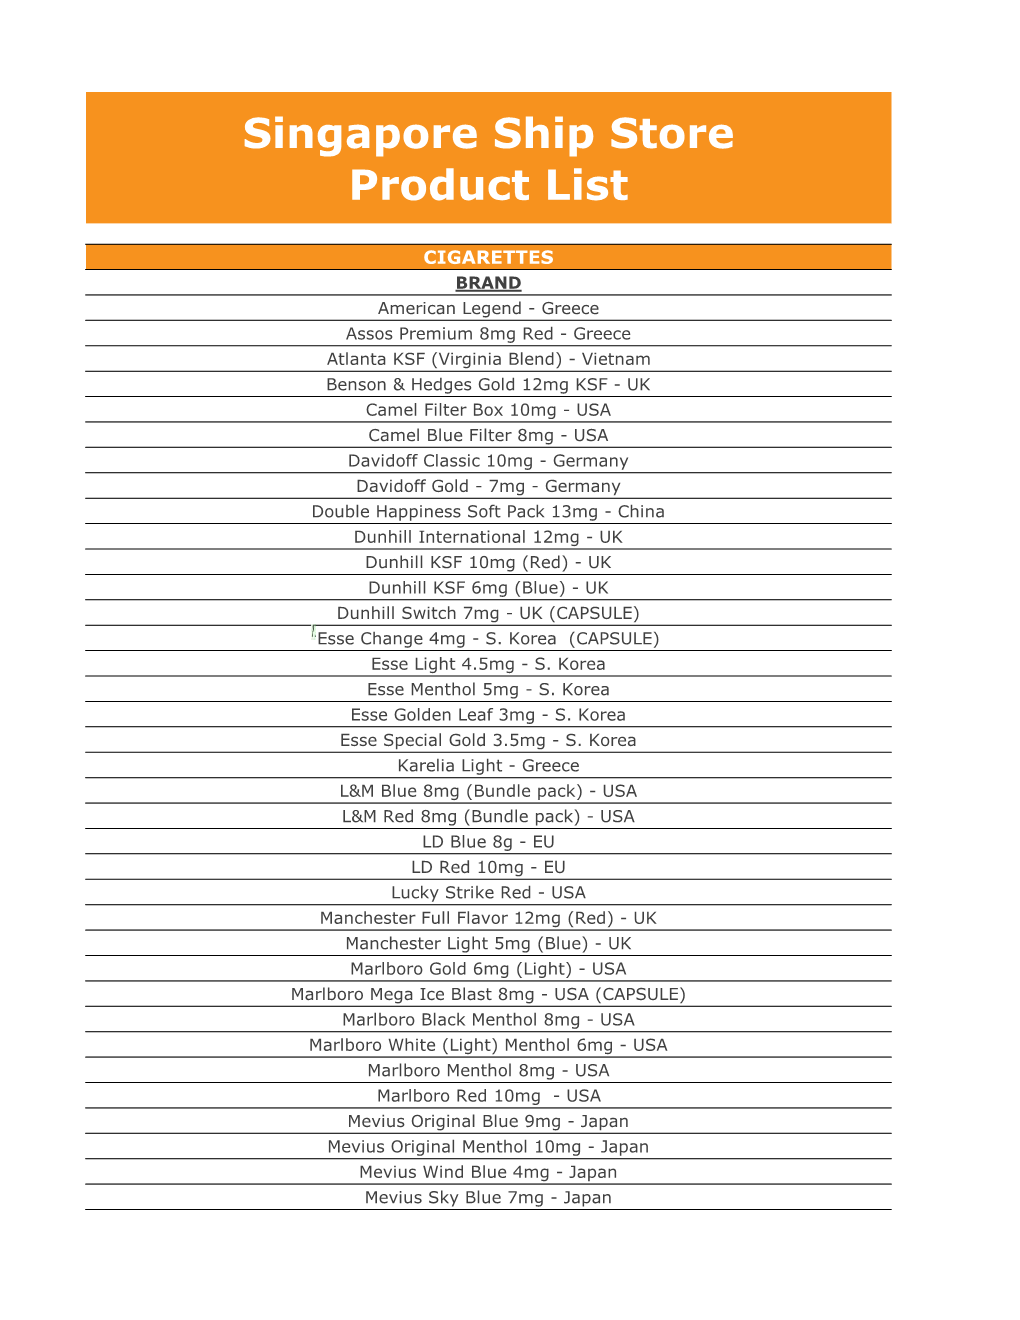 Singapore Ship Store Product List